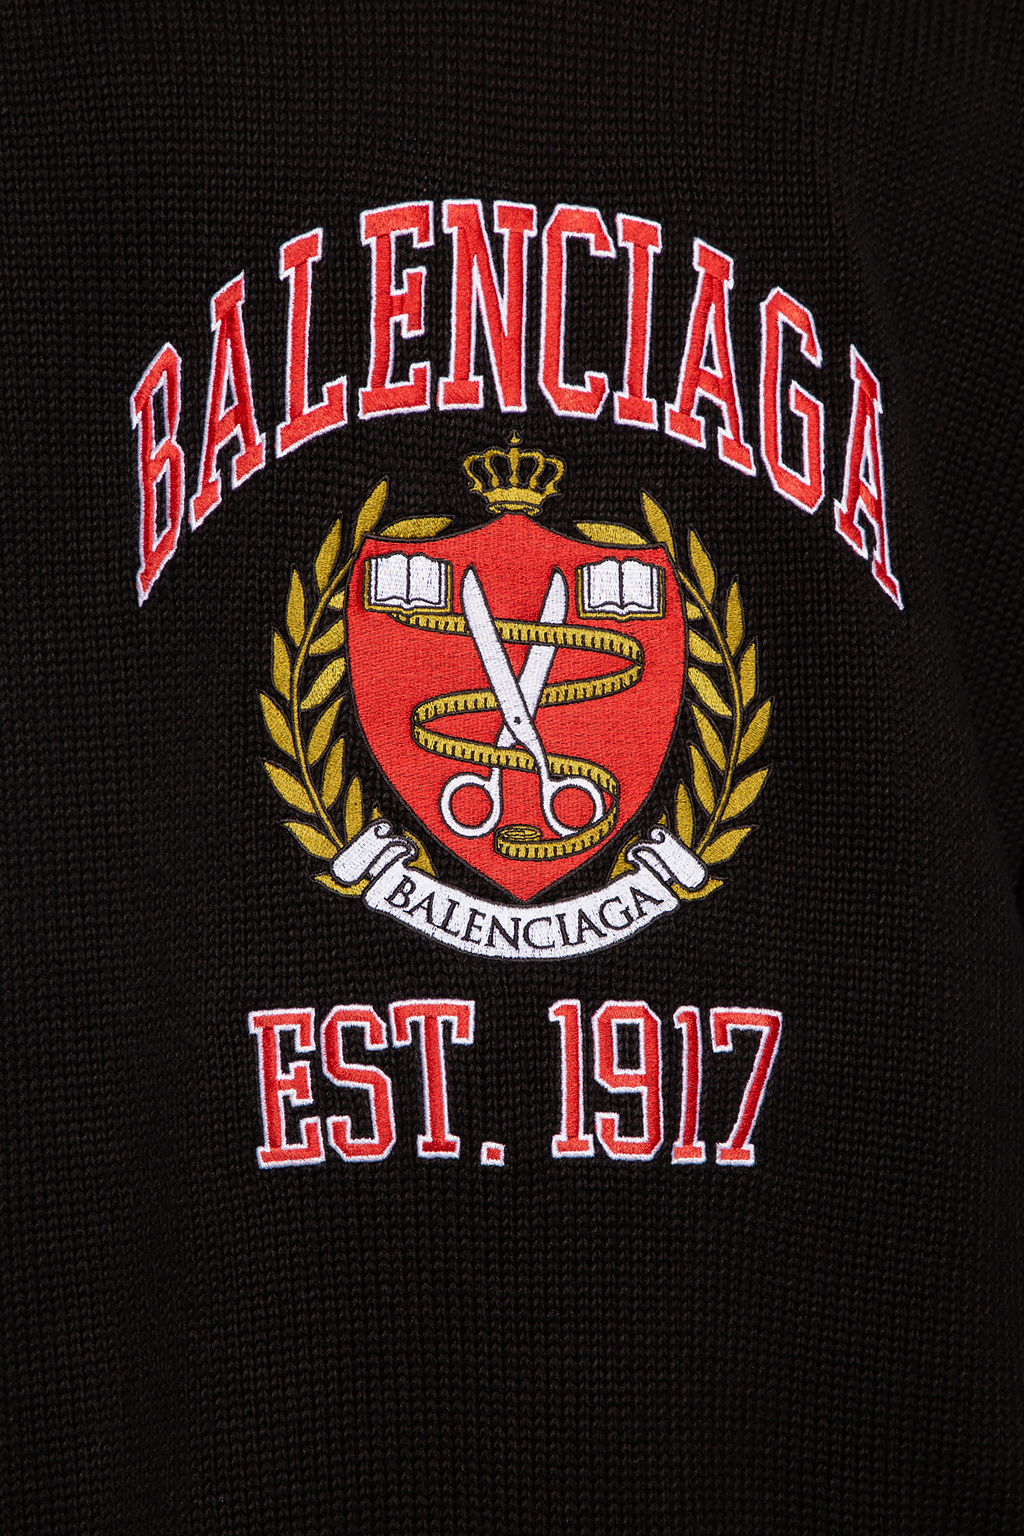 Balenciaga Embroidered sweater